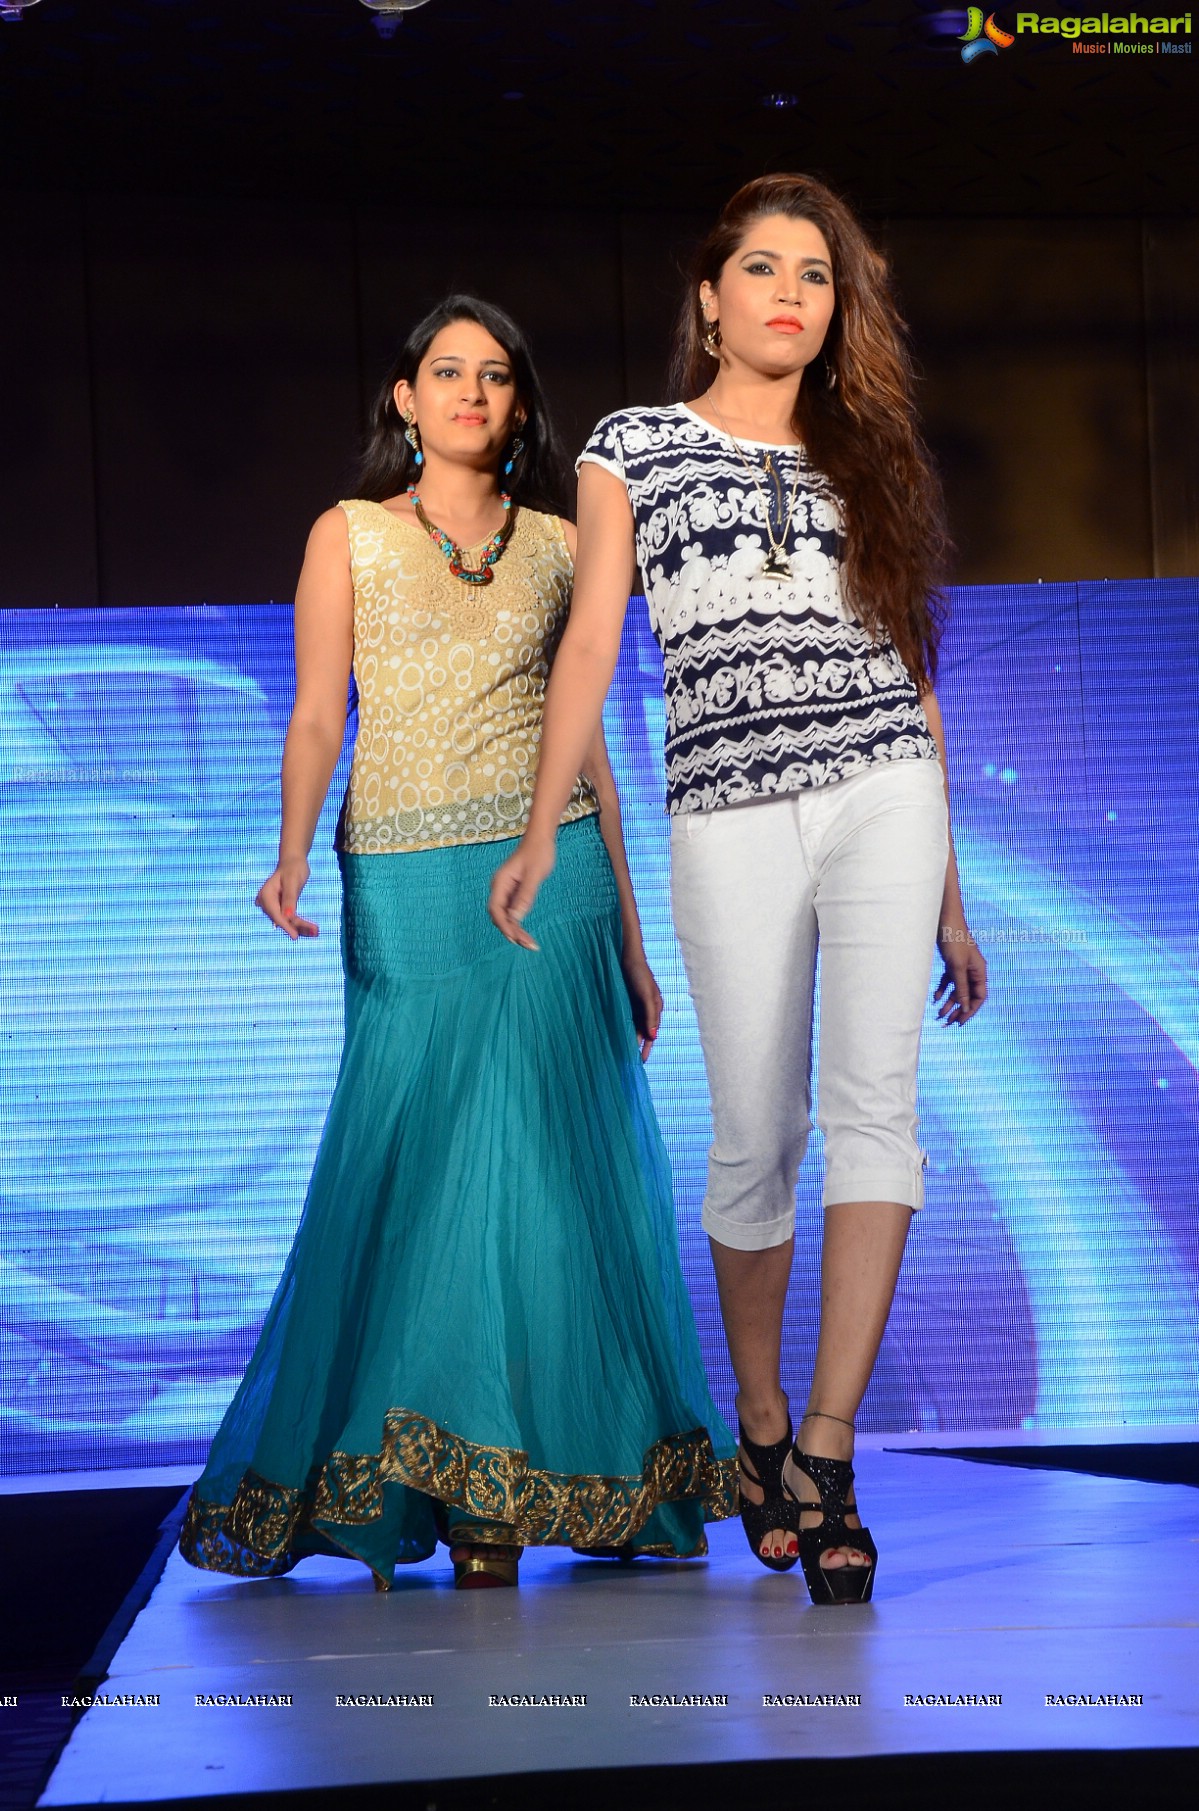 Kaira Fashion Show with Saina Nehwal